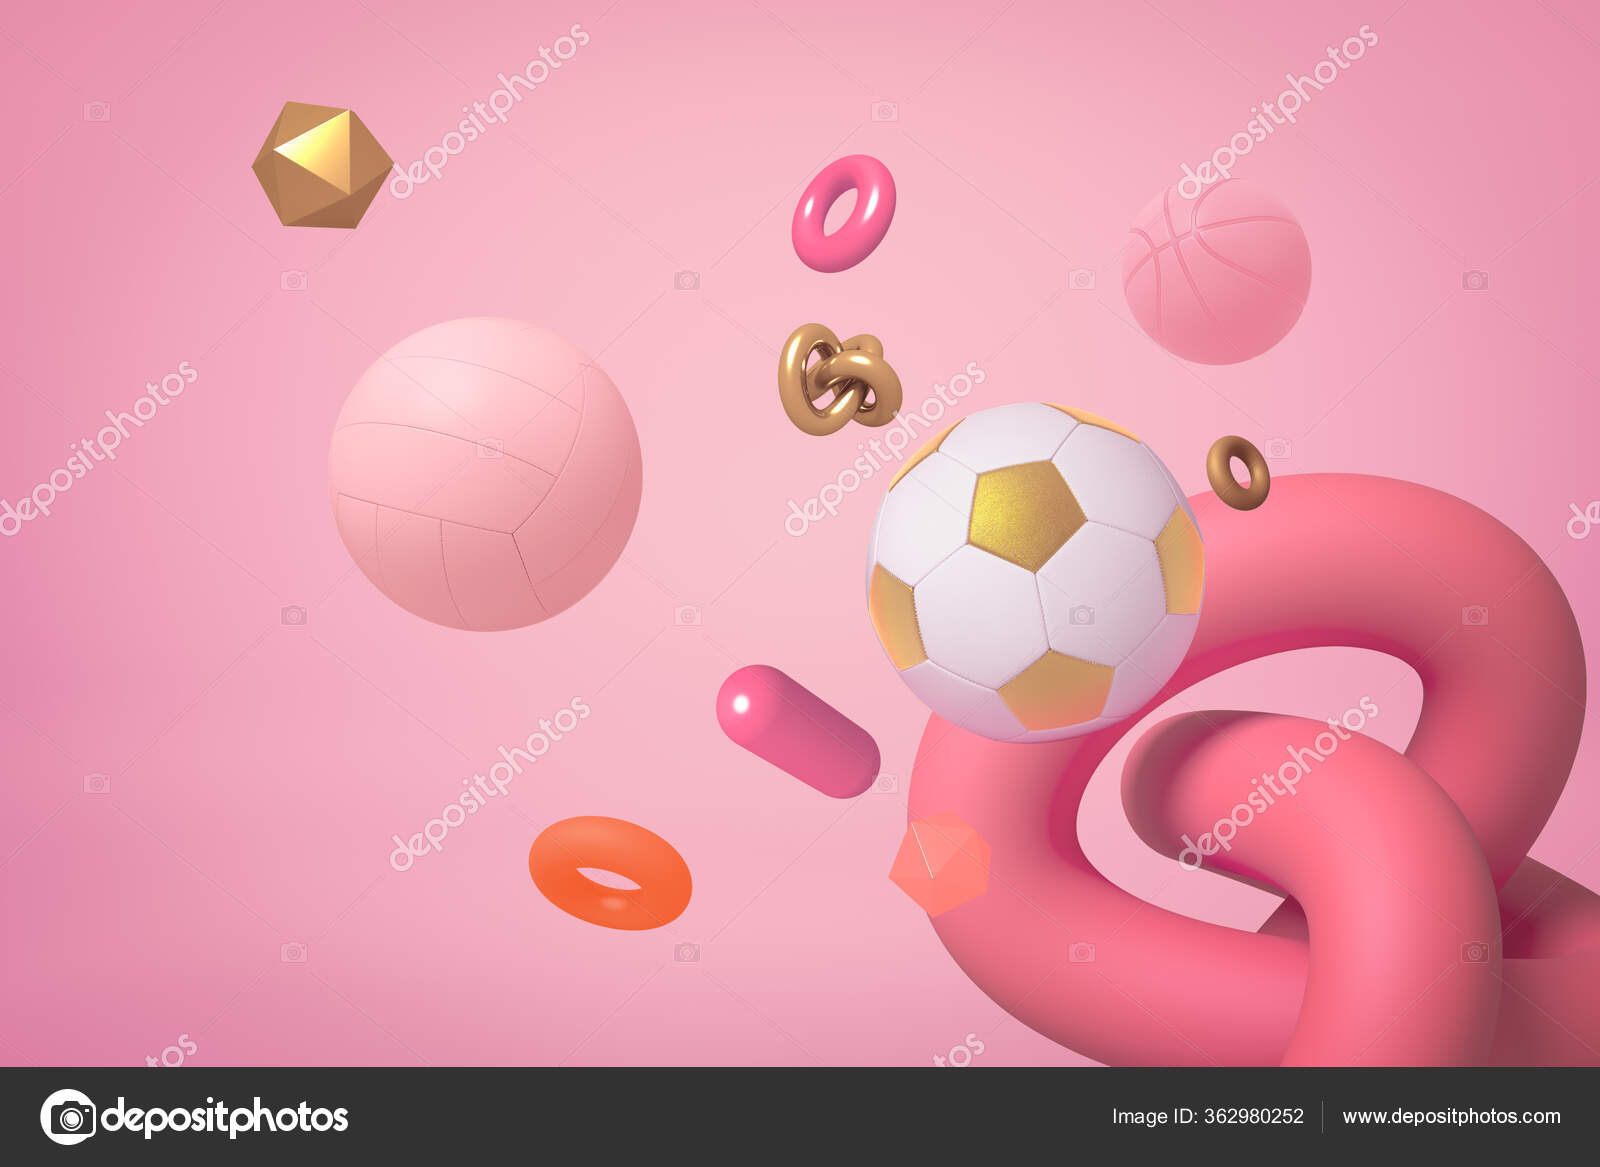 27,086 Pink Stuff Images, Stock Photos, 3D objects, & Vectors